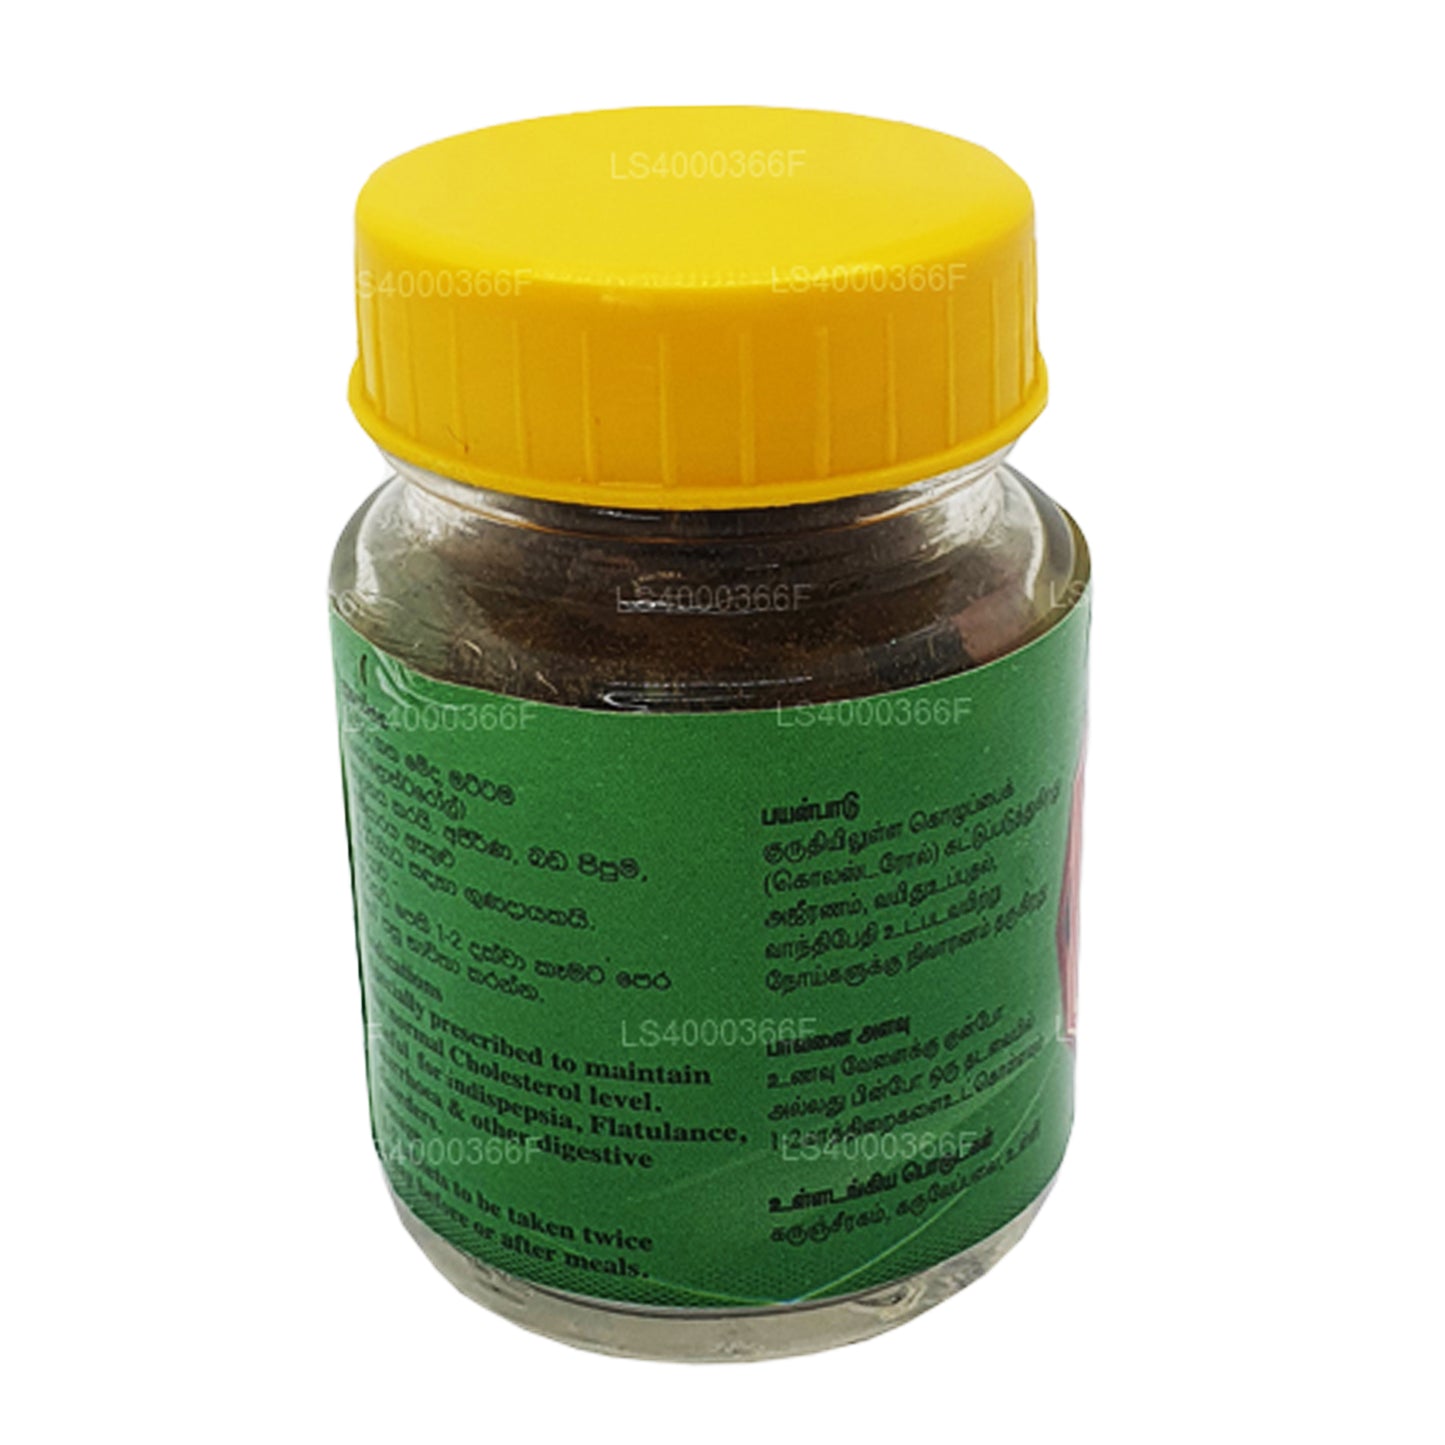 SLADC Meda Harani-tabletten (30 g)